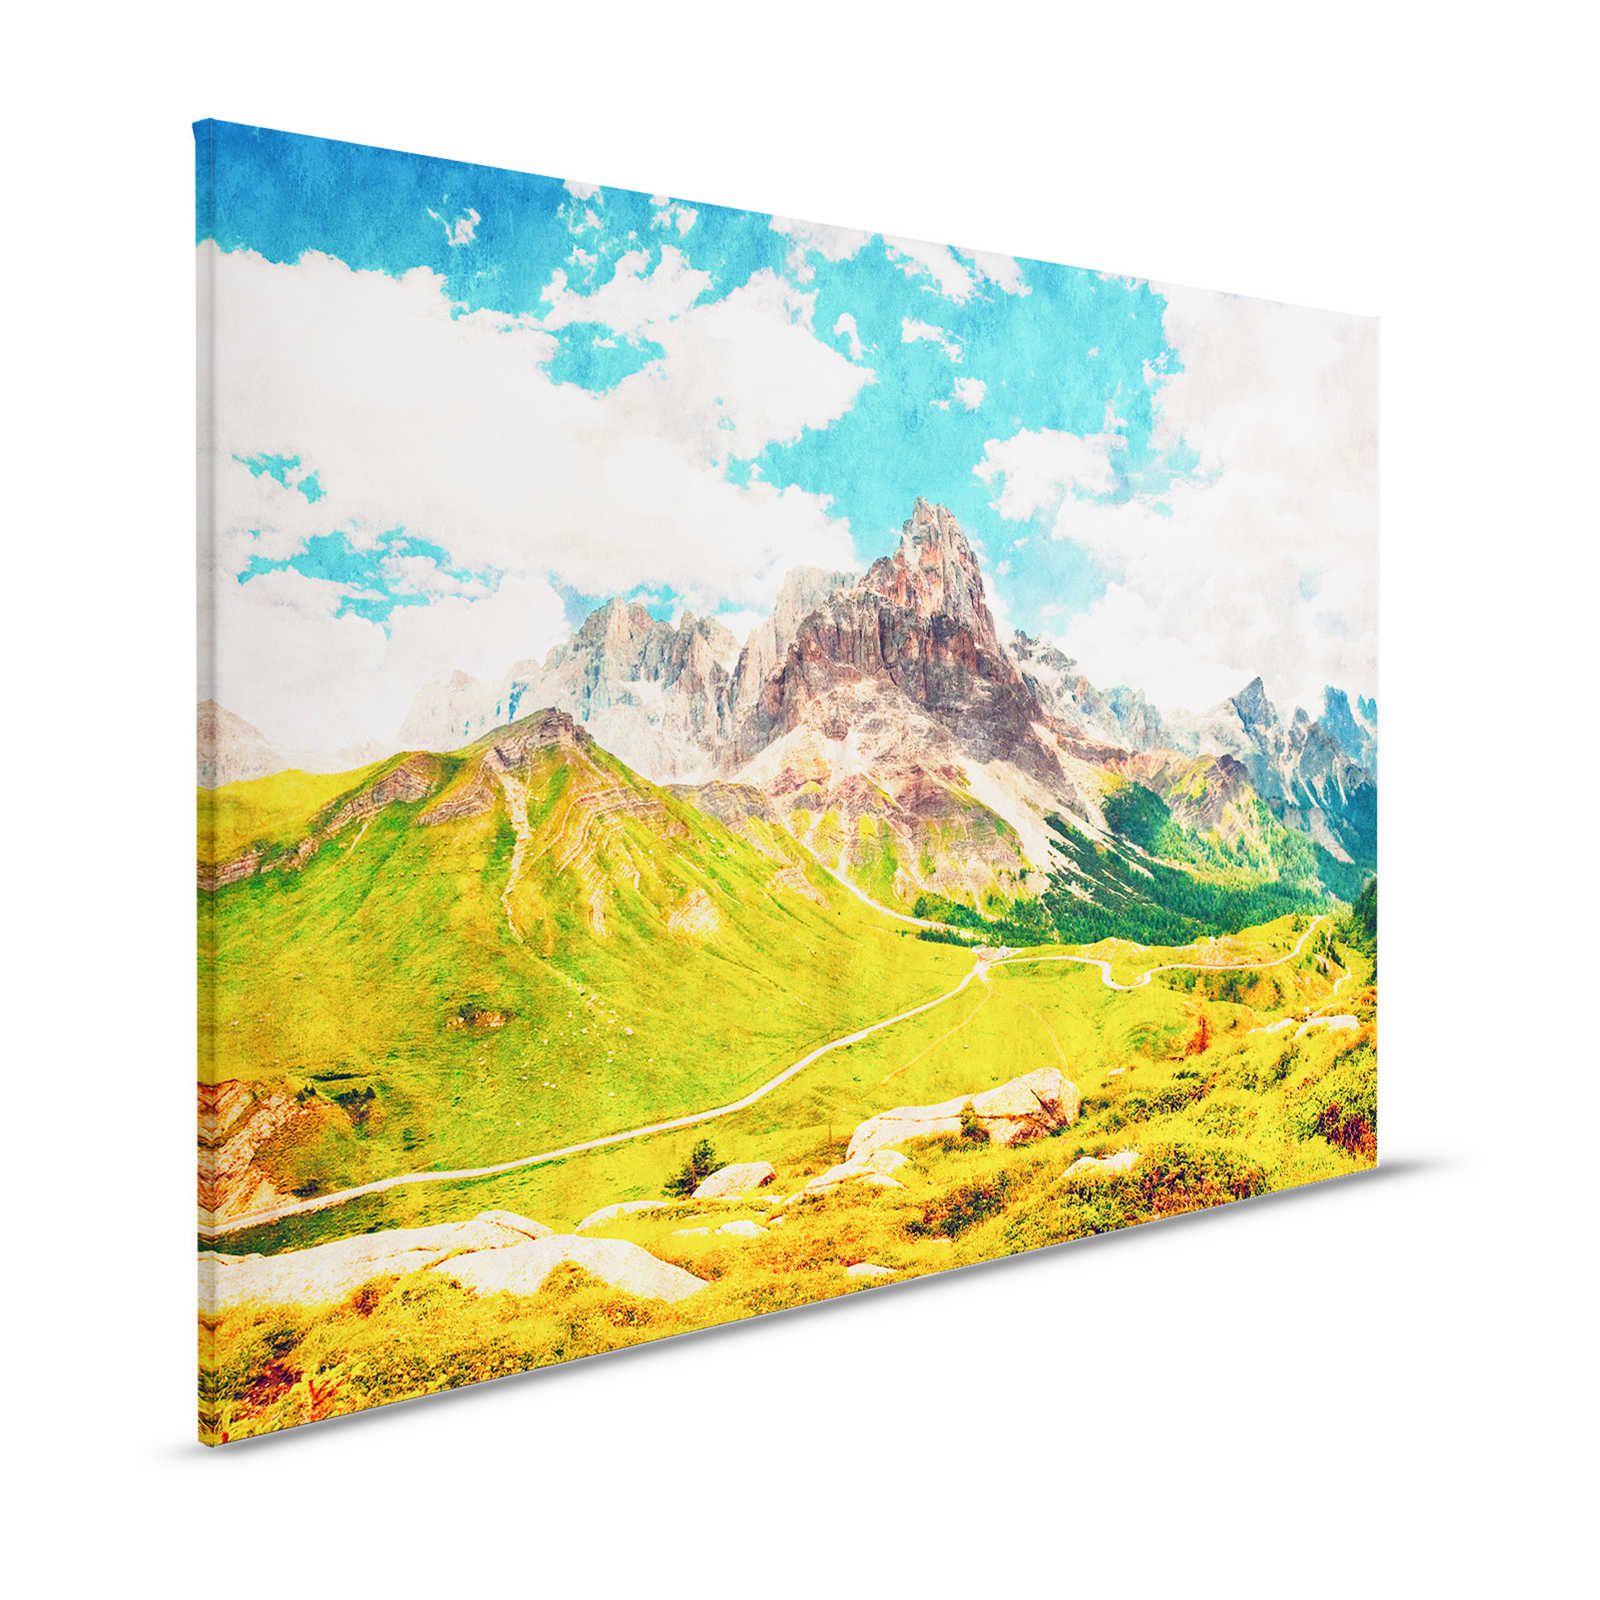         Dolomiti 1 - Leinwandbild Dolomiten Retro Fotografie – 1,20 m x 0,80 m
    